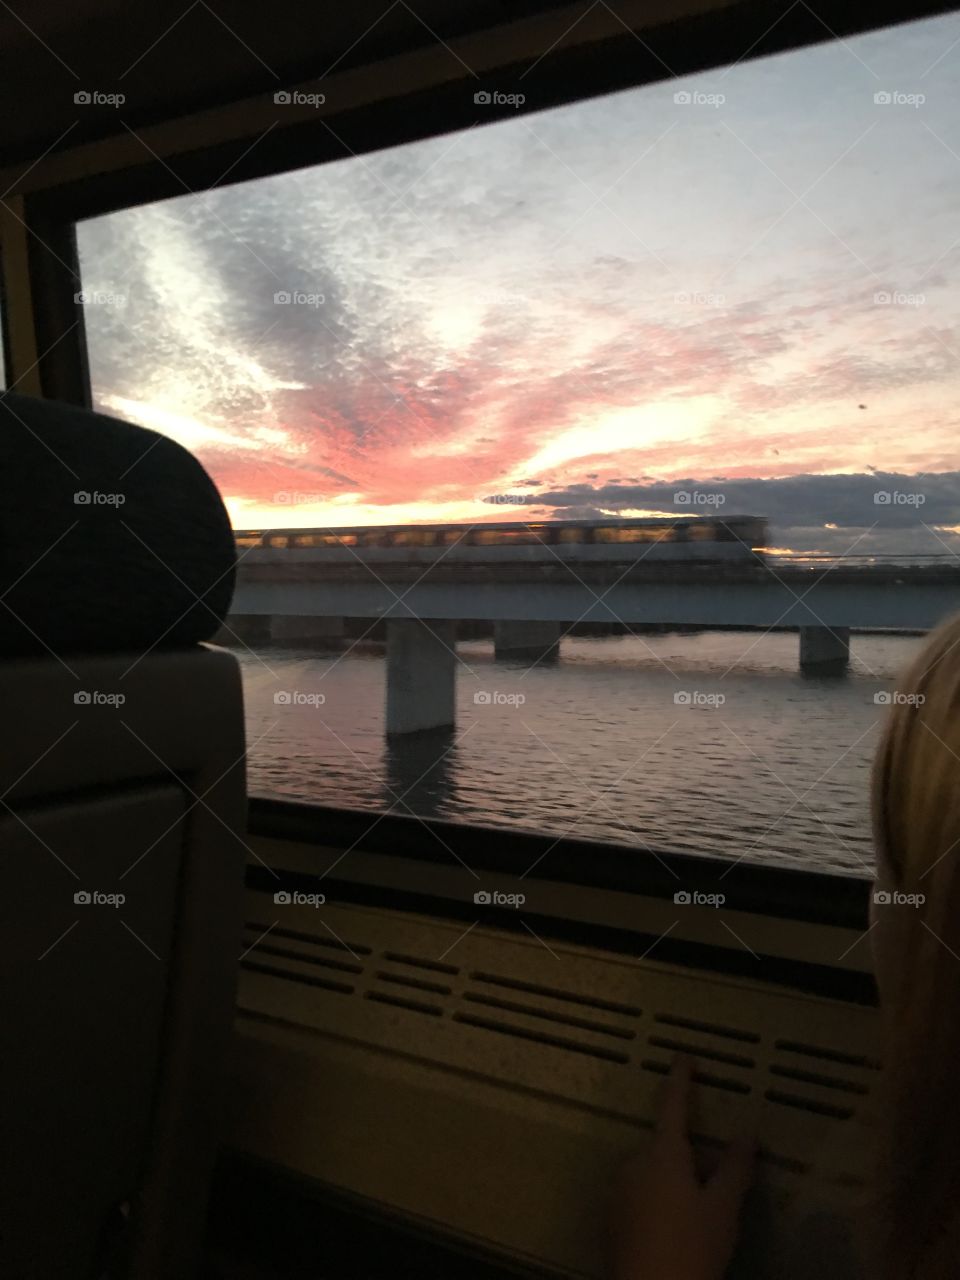 Train view - sunset